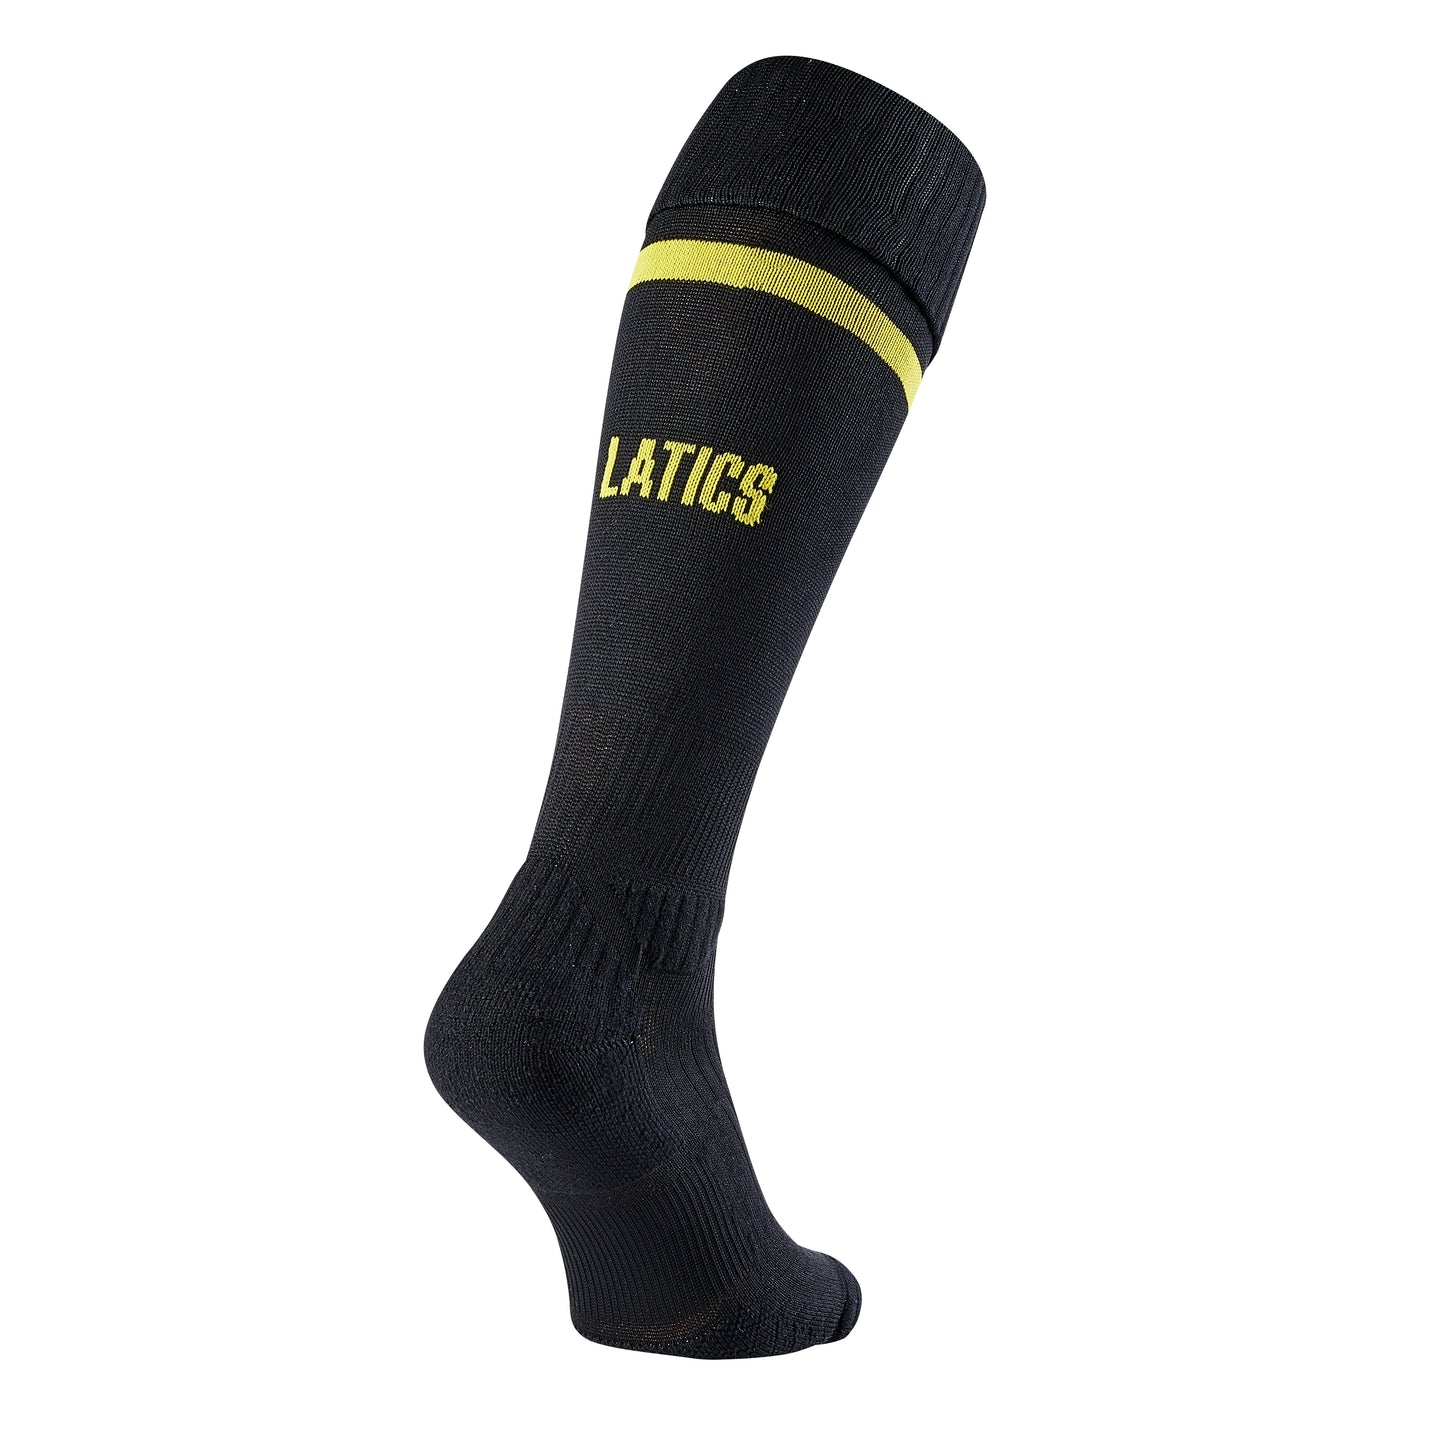 Away Adult Sock 22/23 (Black)